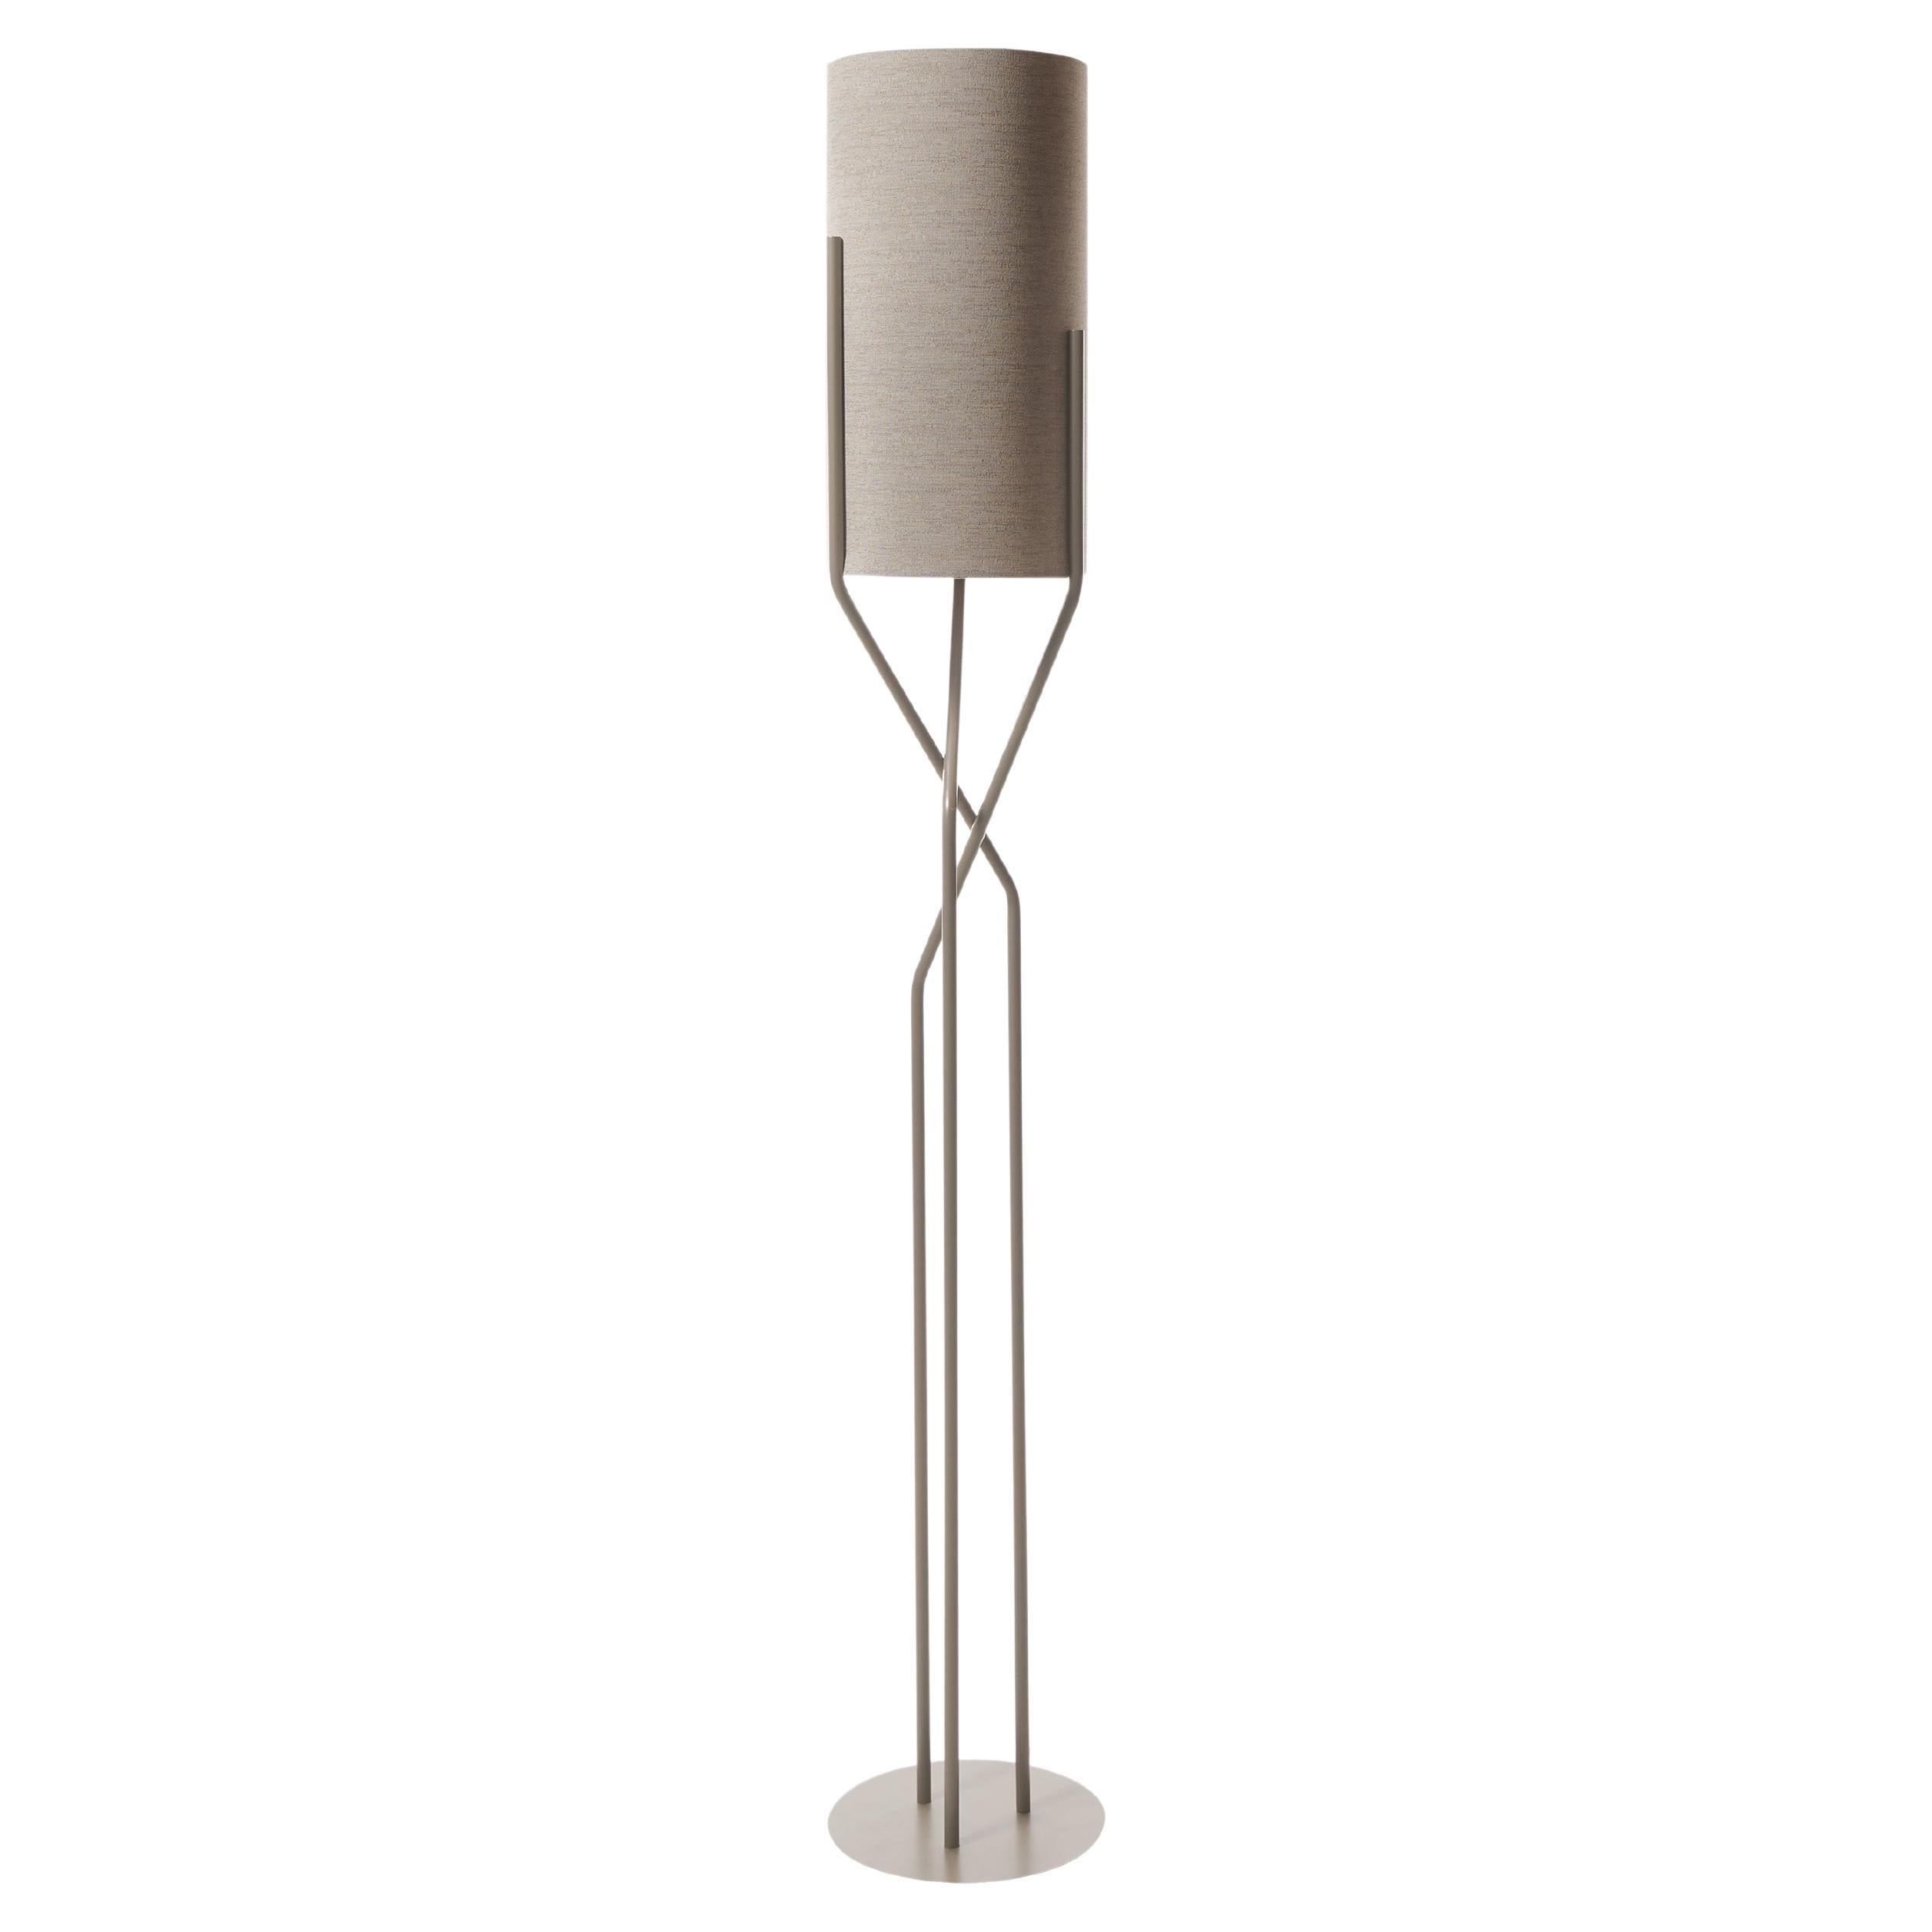 Slide Design Aura Floor Lamp in Melange Ecru Lampshade with Pearl Gray Stem